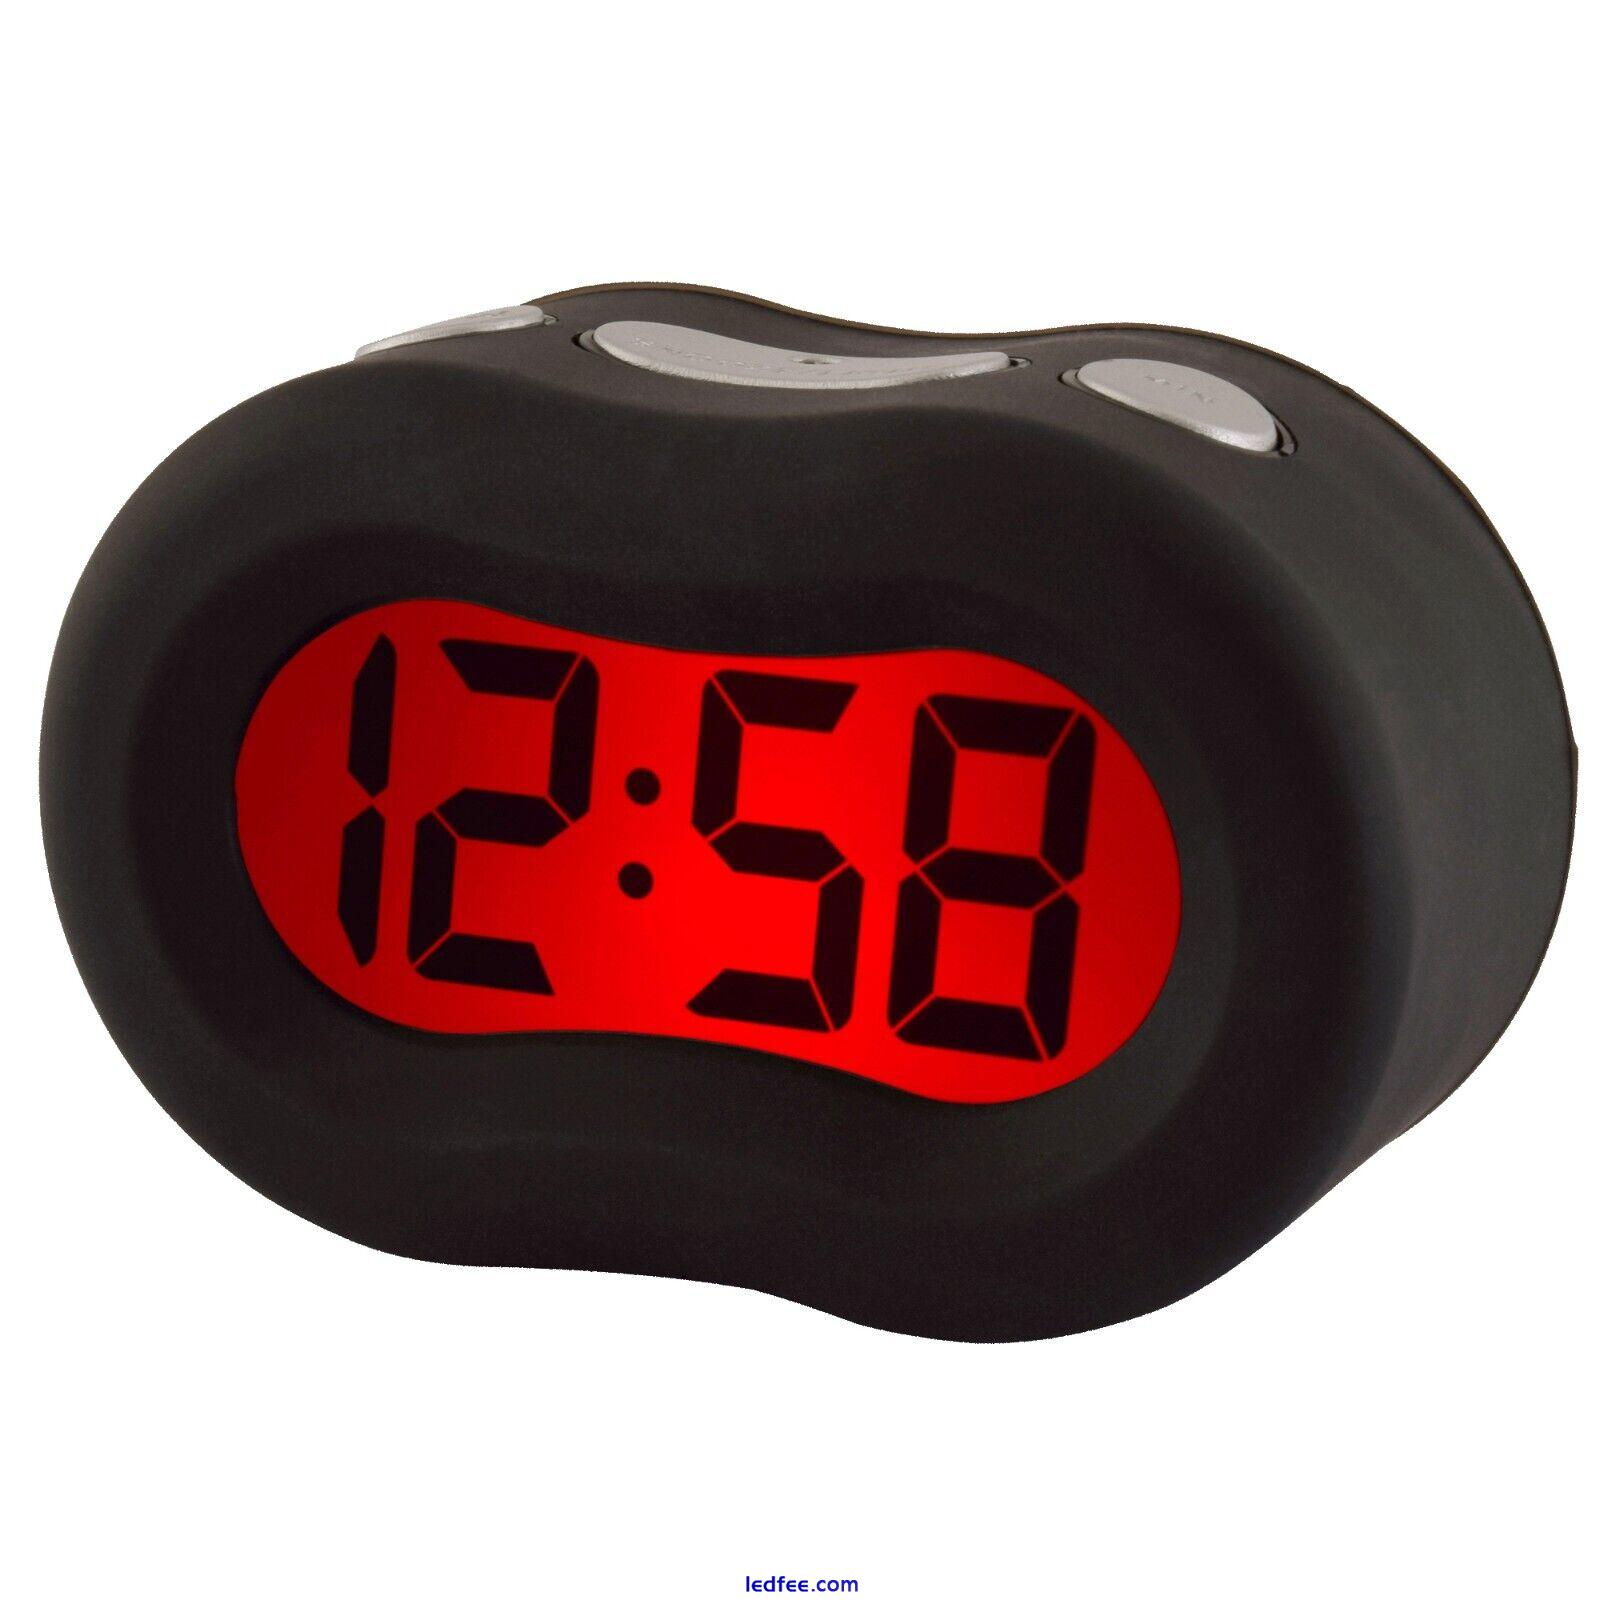 Acctim Vierra Digital Alarm Clock Smartlite� Crescendo Alarm Silicone Case 4 